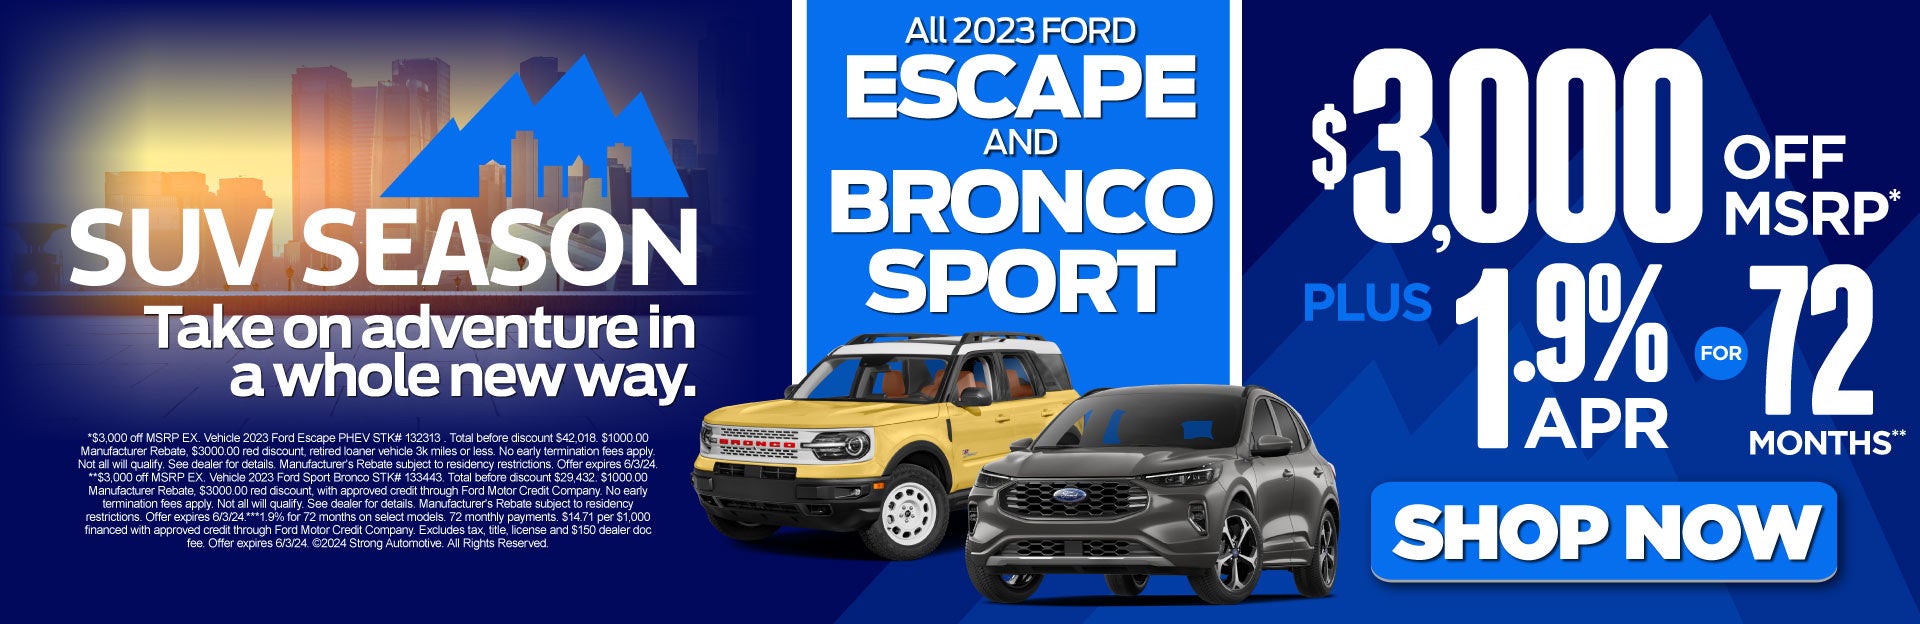 2023 escape and bronco sport $3,000 off msrp | shop now